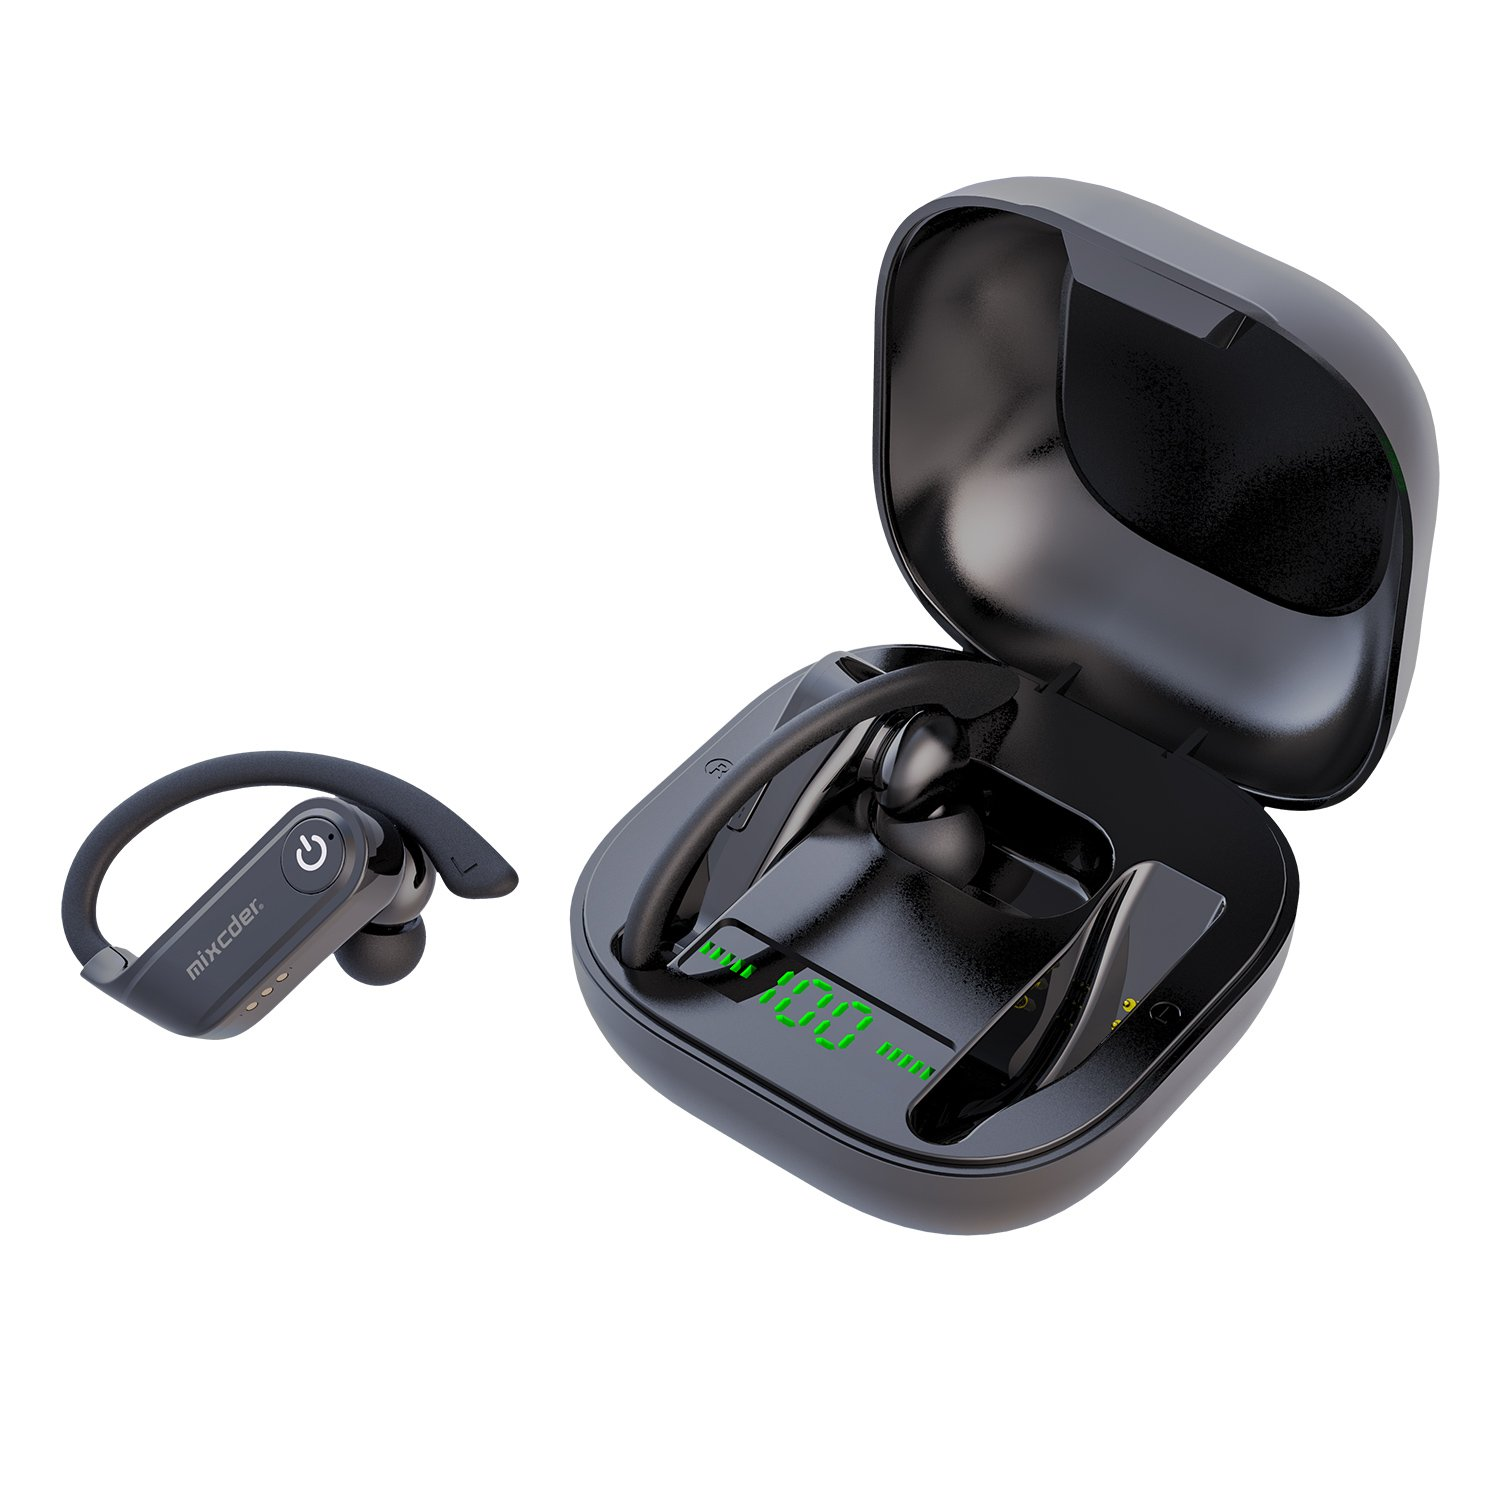 Mixcder T2 Totally Wireless Sports Earphones Bluetooth 5.0 Sweatproof